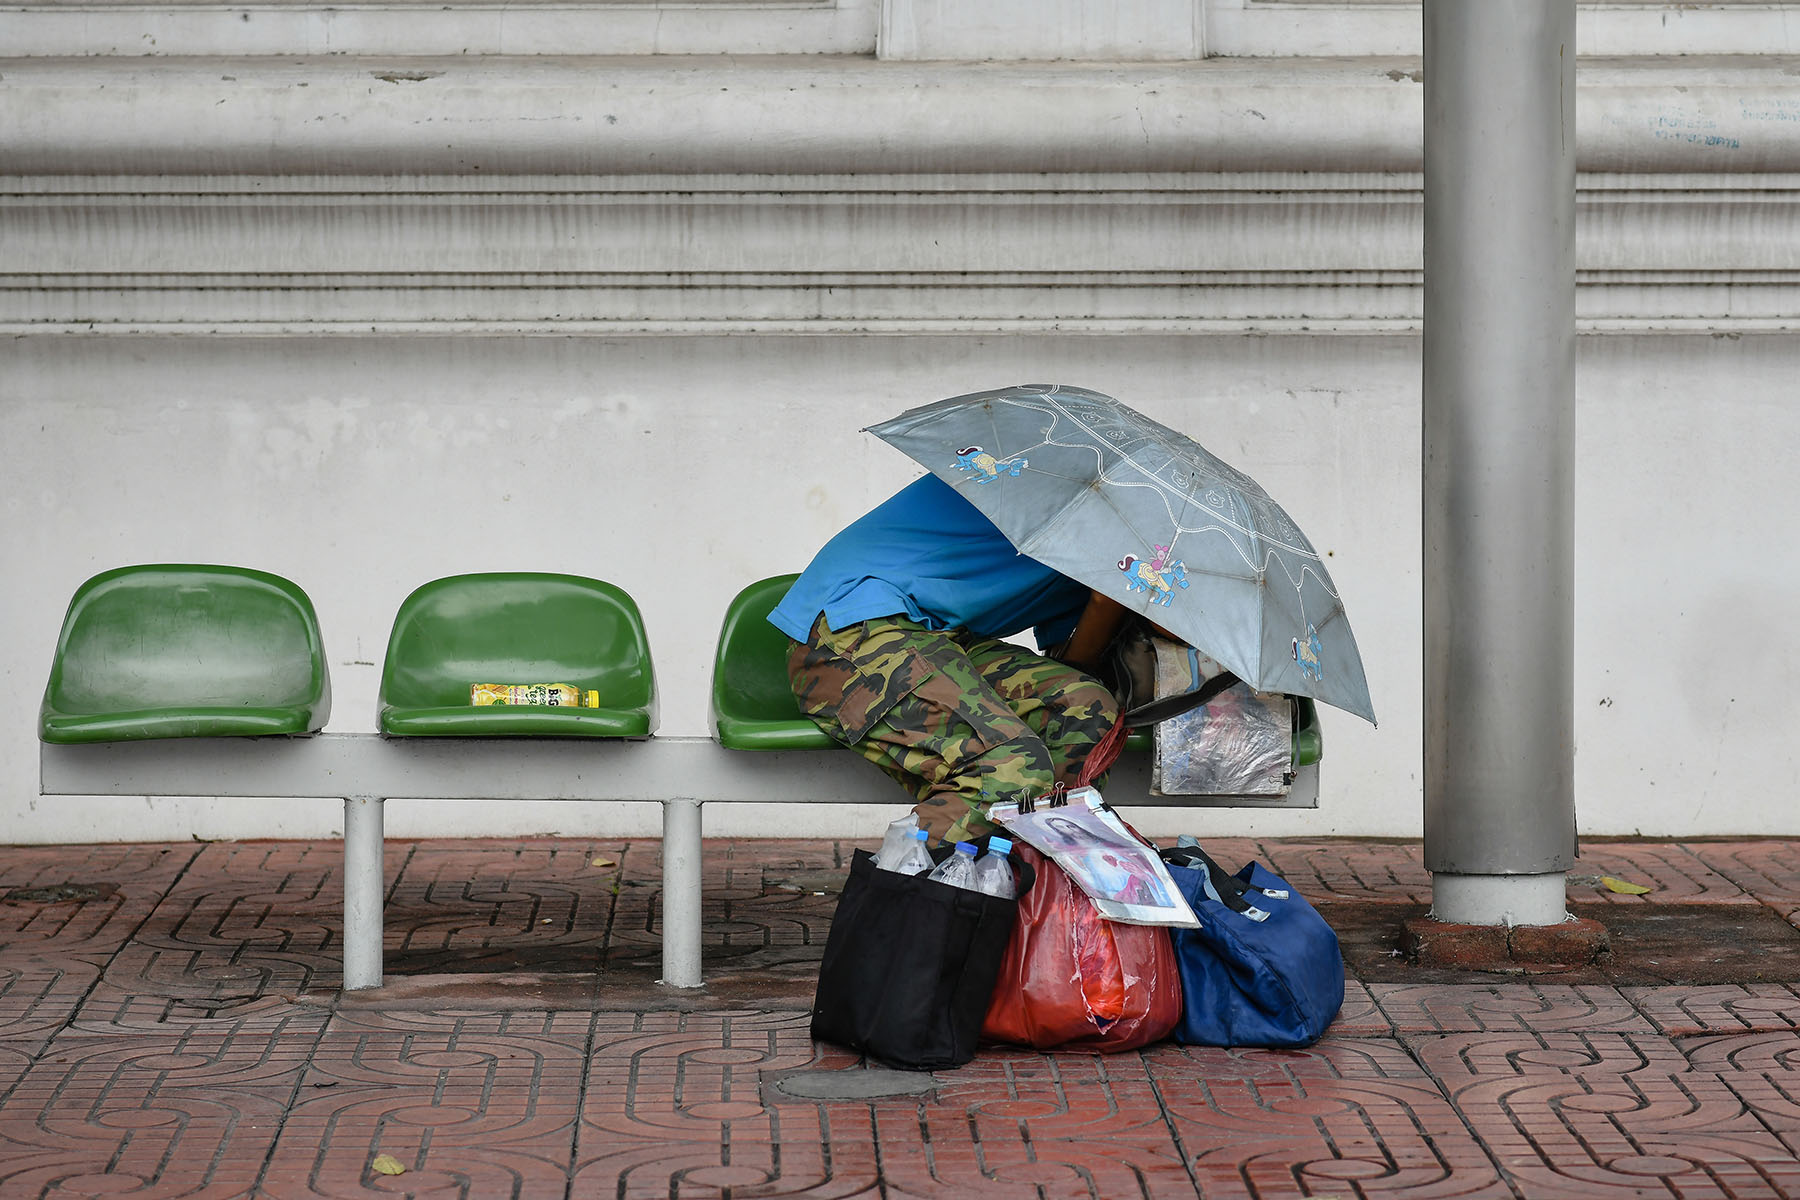 A houseless person is hiding underneath an umbrella while sitting near a bus stop in Bangkok.